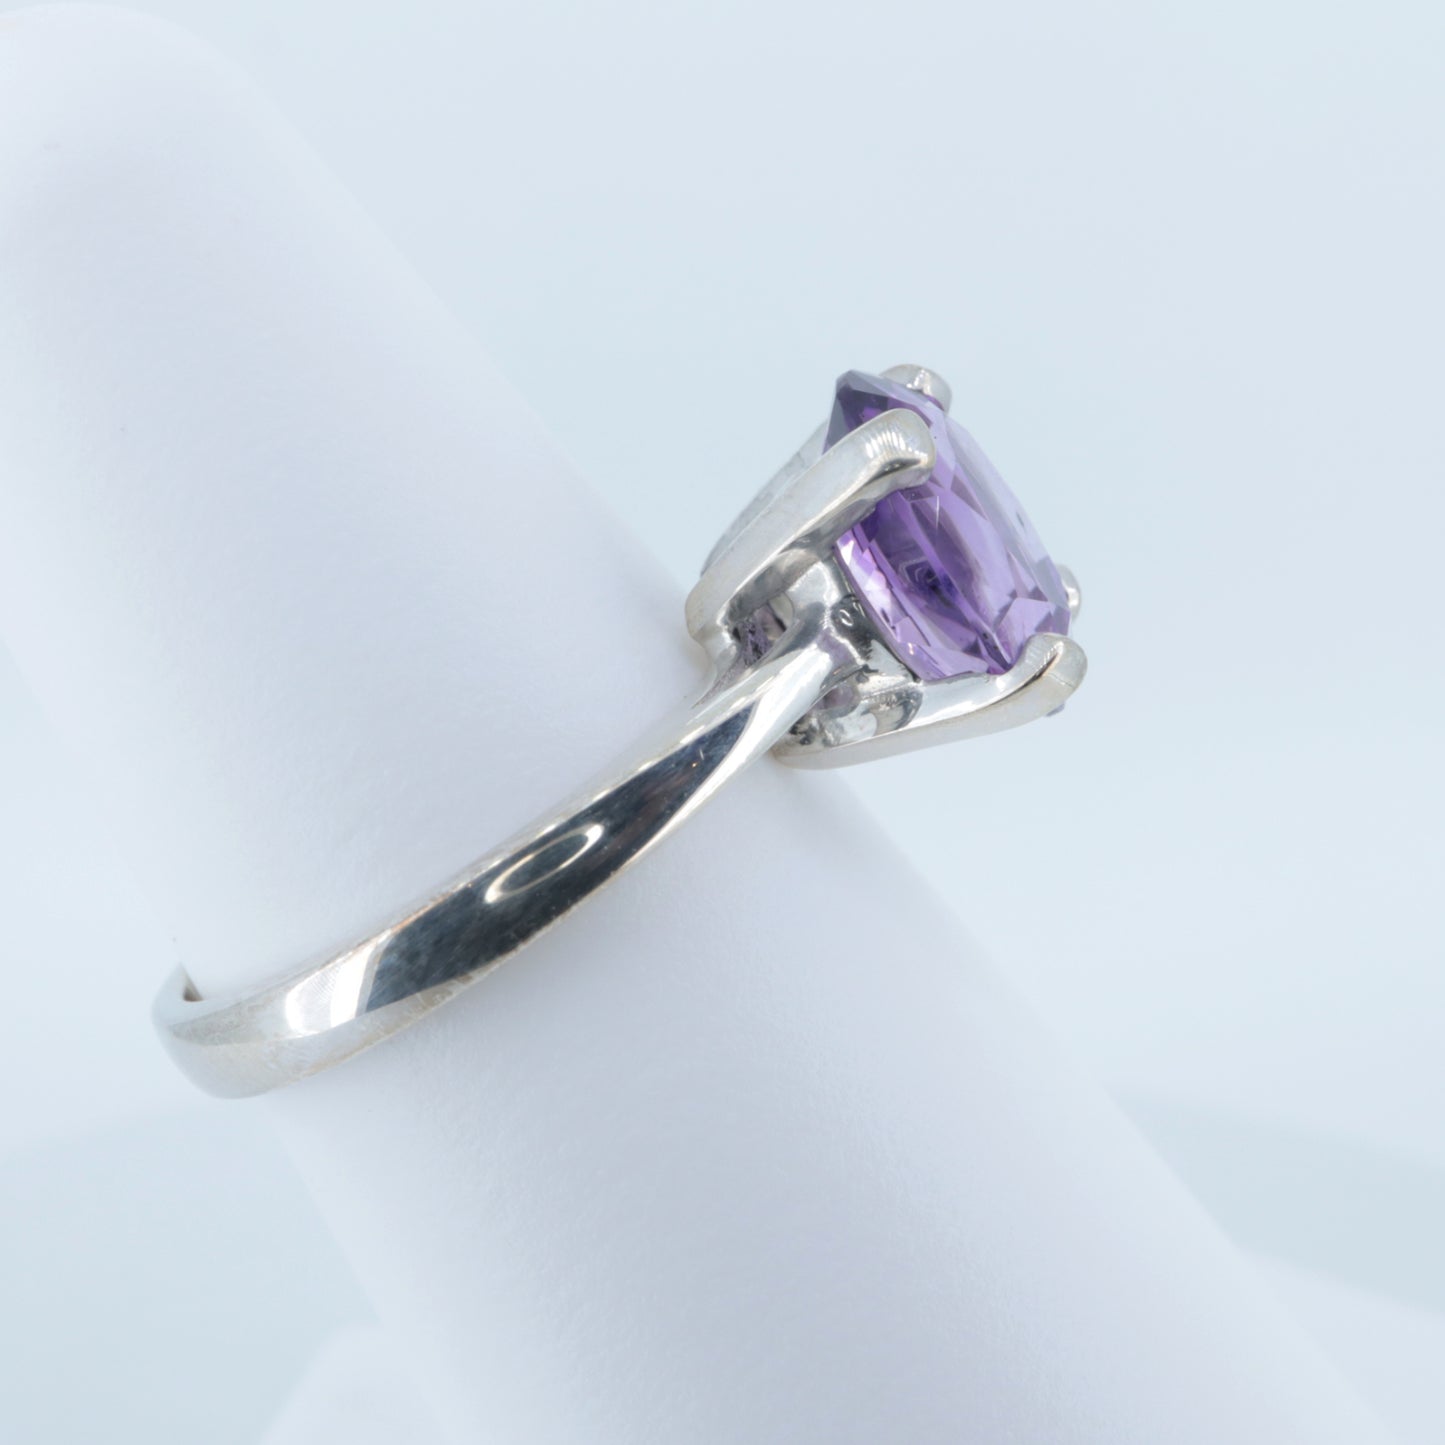 Elegant Amethyst Rose Cut Ring in 925 Sterling Silver - Size 6"